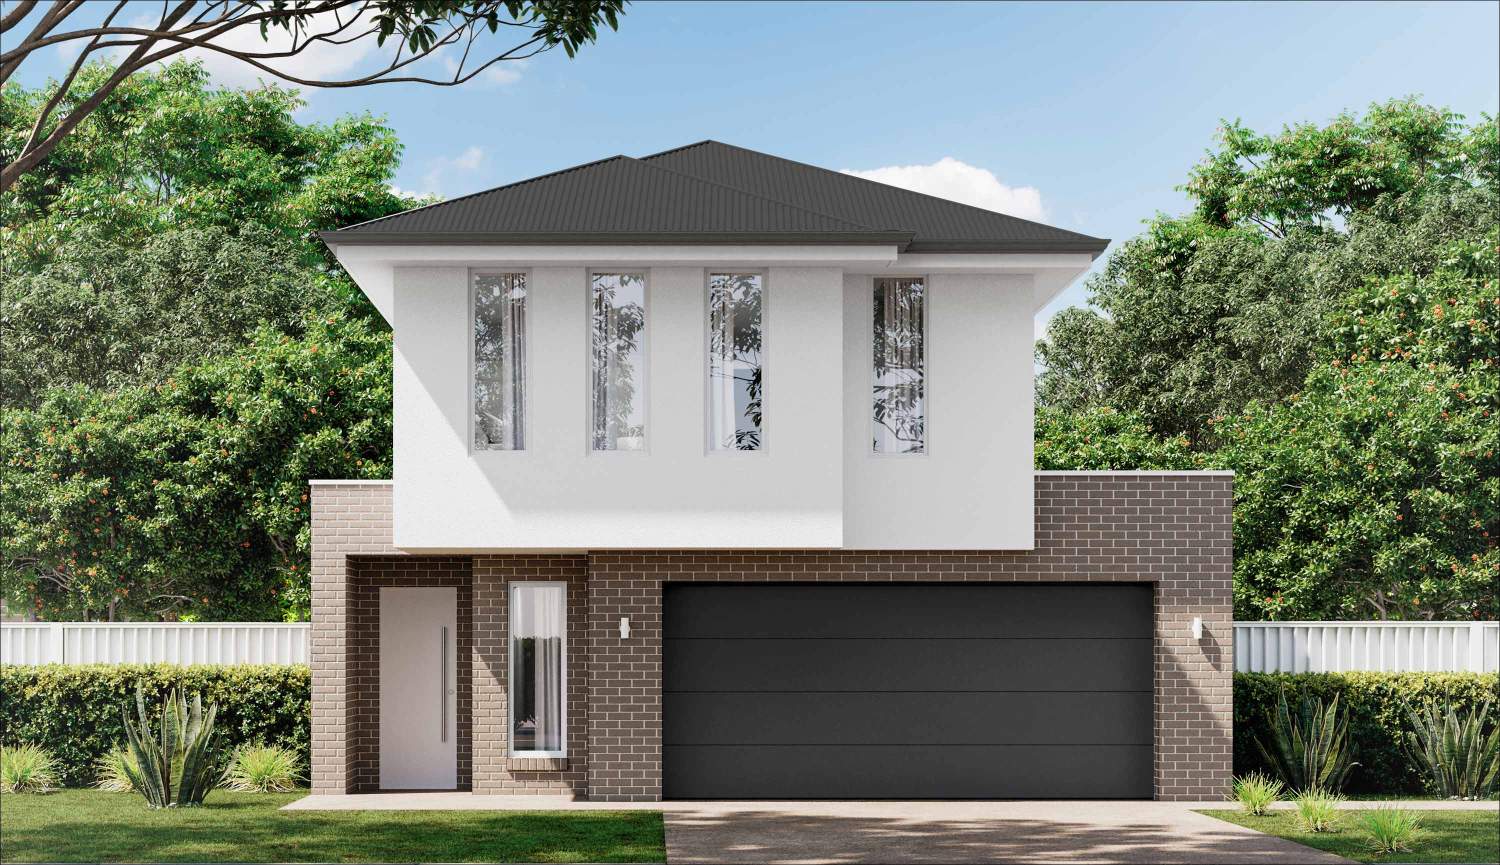 Morphett-two-storey-home-design-classic-facade